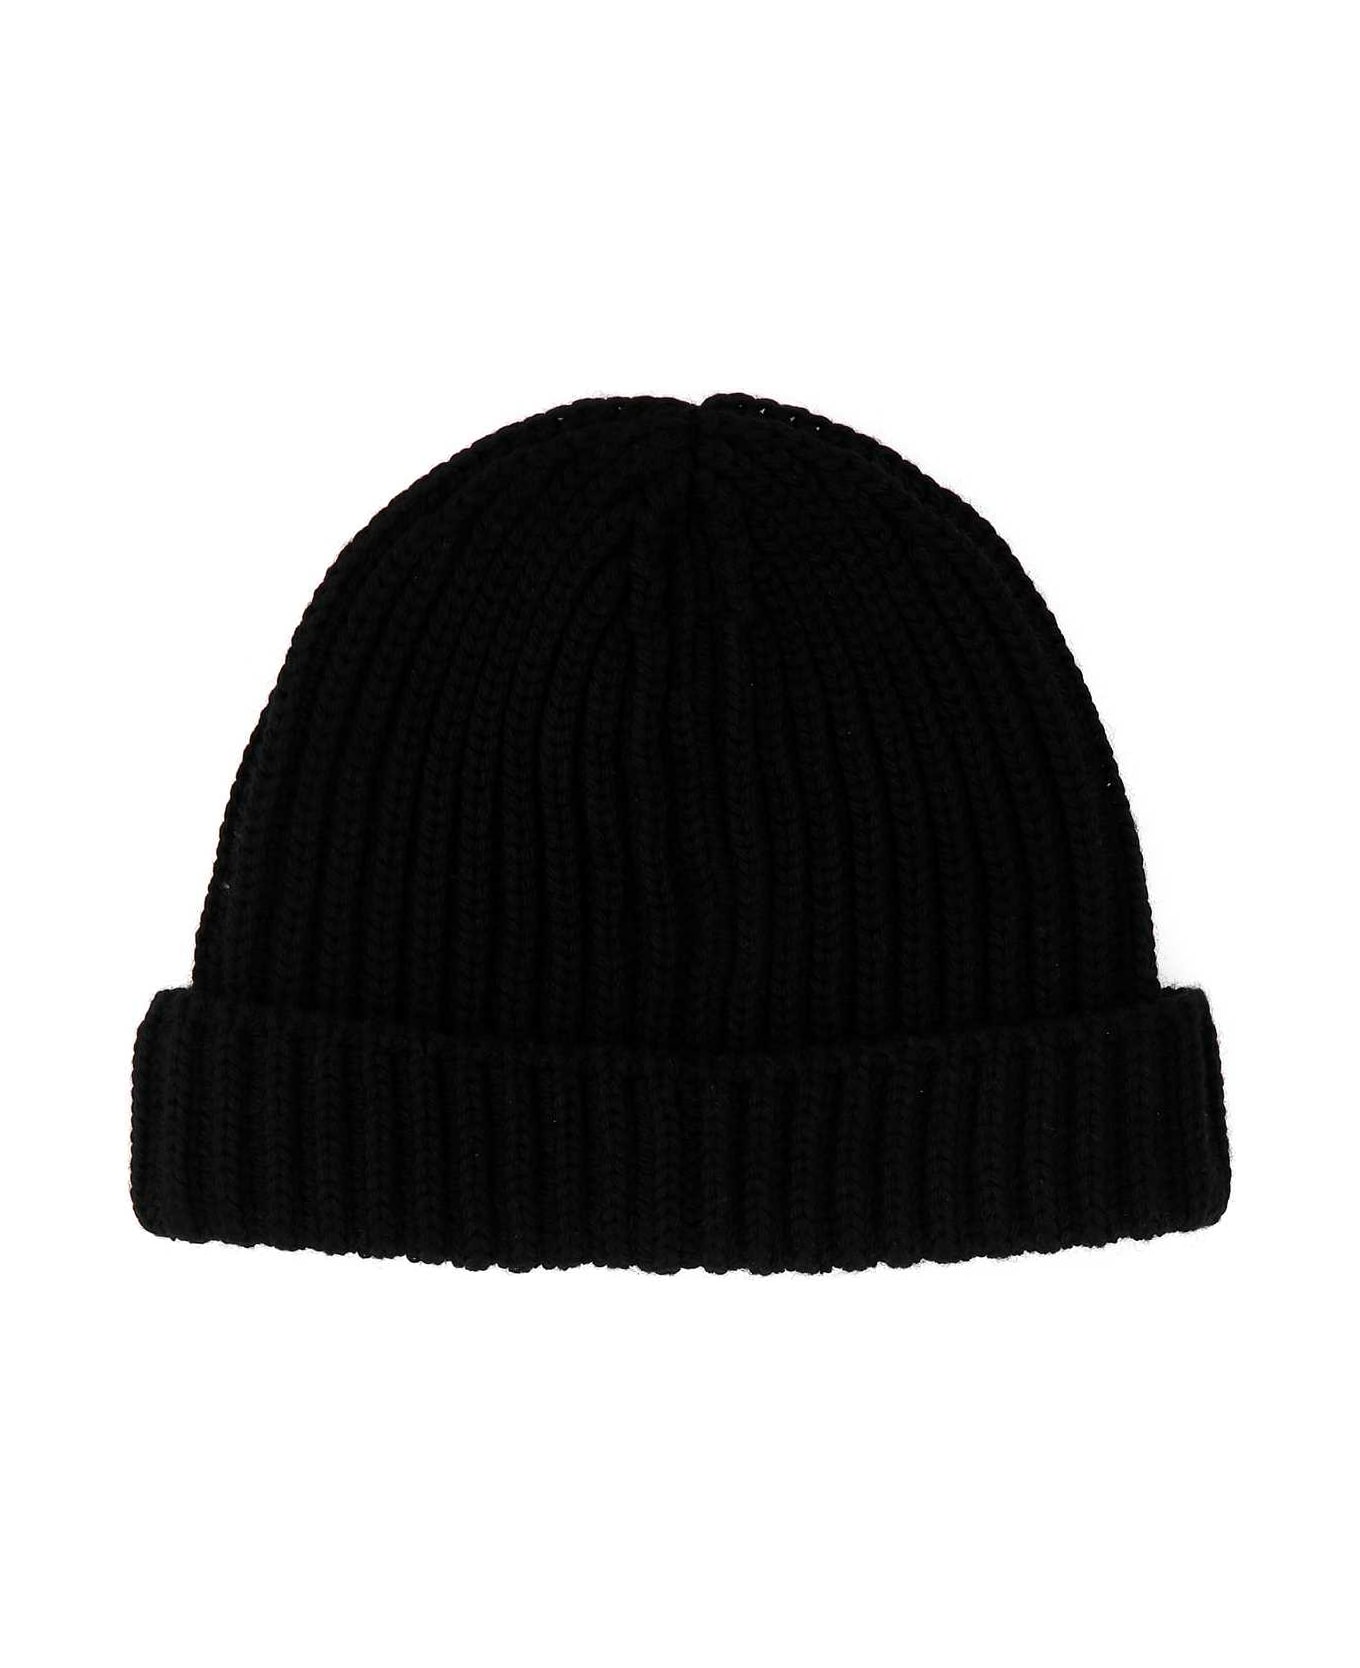 Prada Black Wool Beanie Hat - F0002